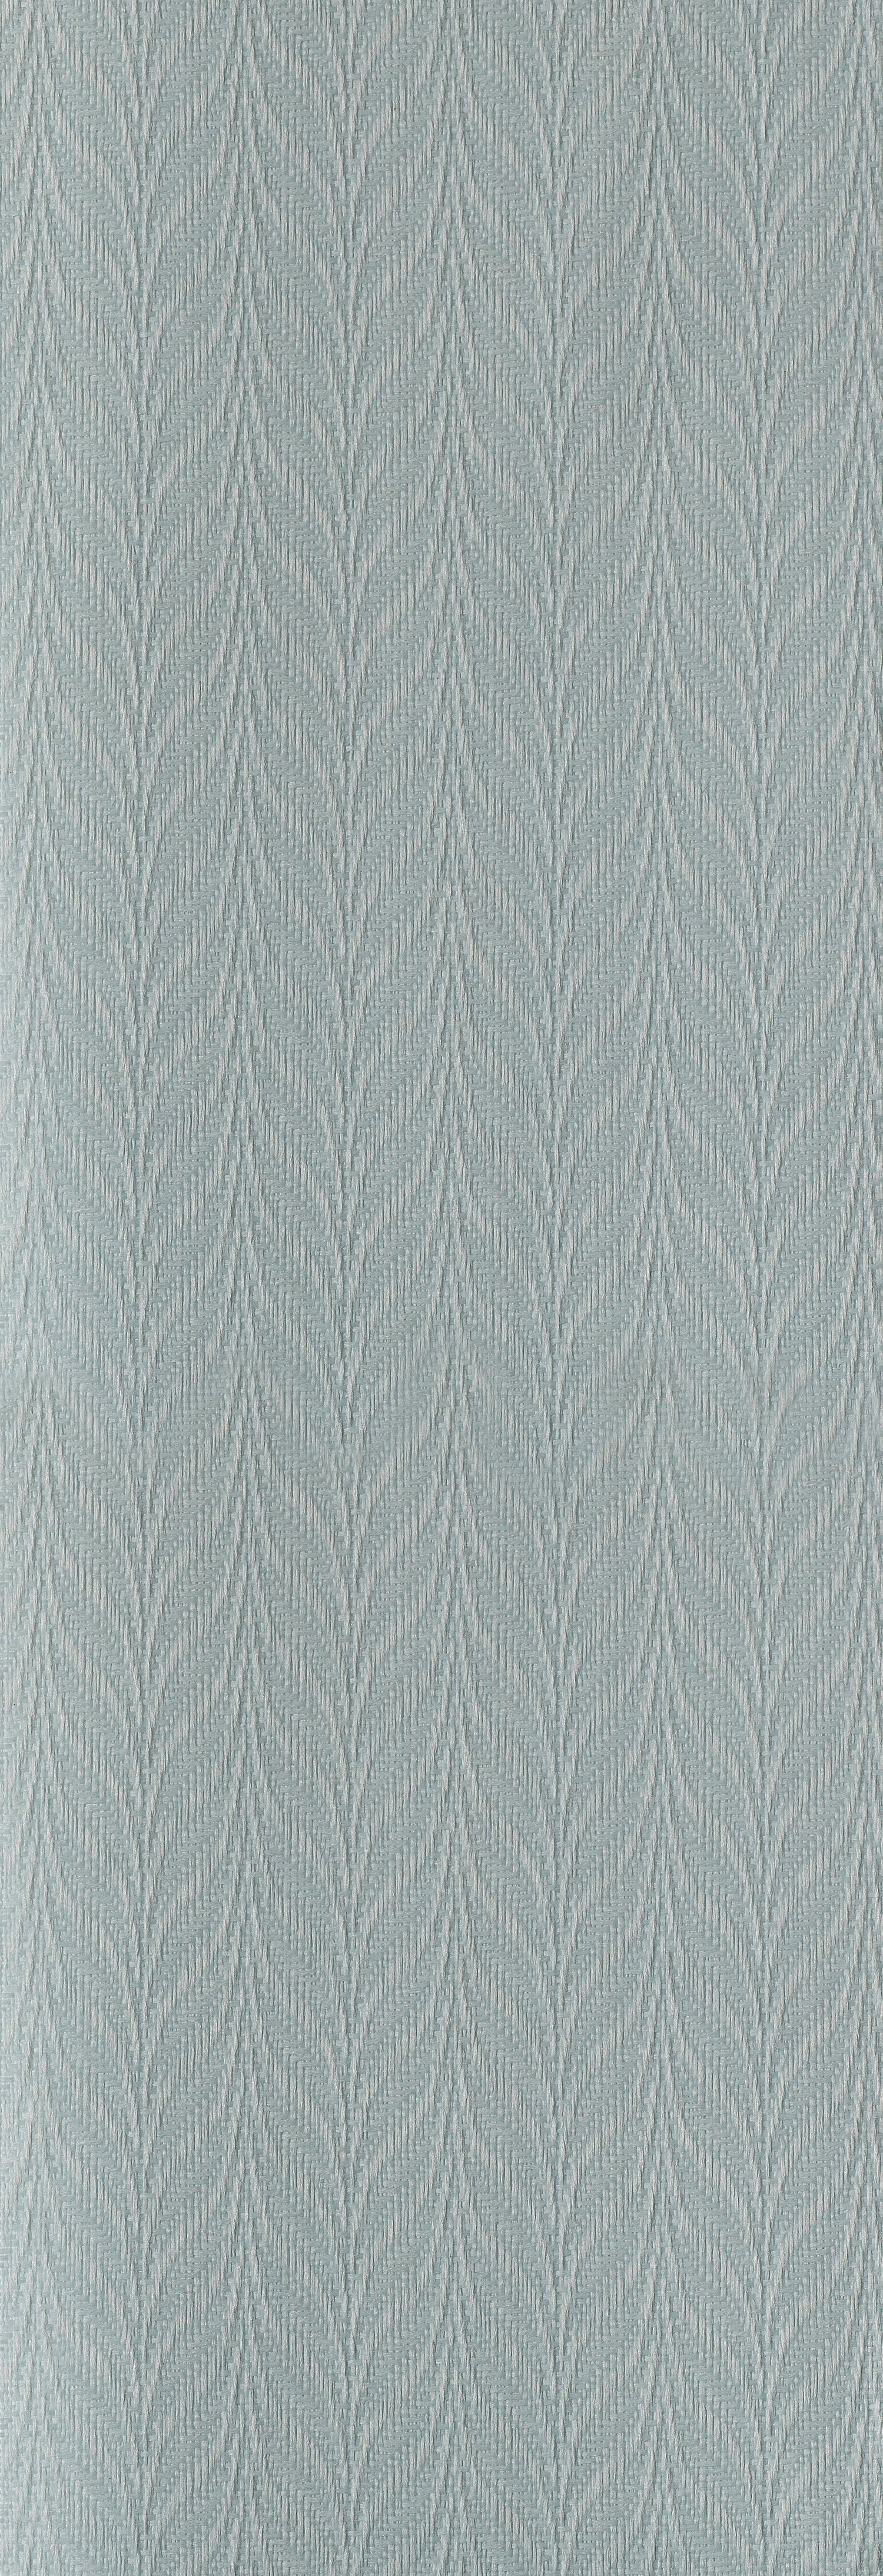 Feather Weave Mist - Blue Vertical Blinds